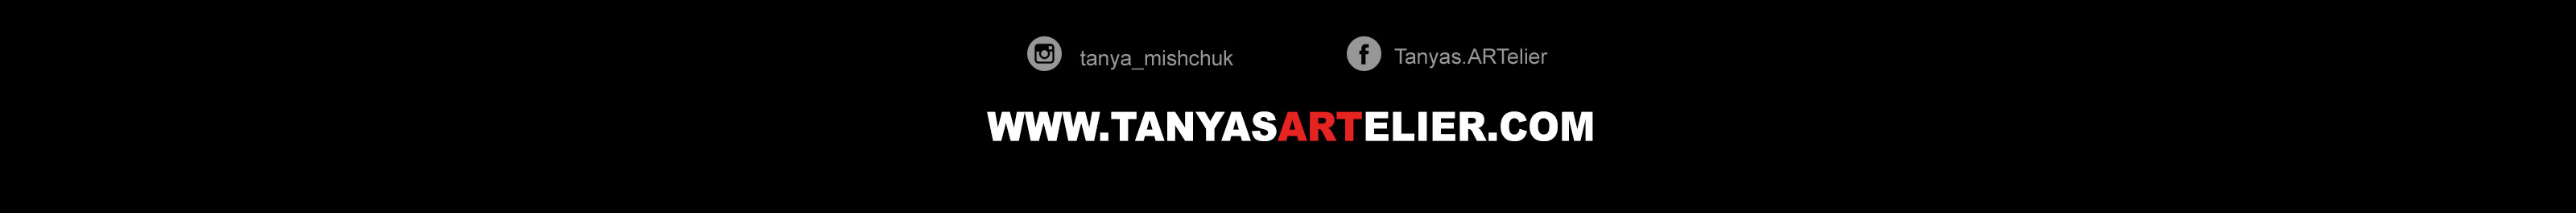 Tanya Mishchuk's profile banner